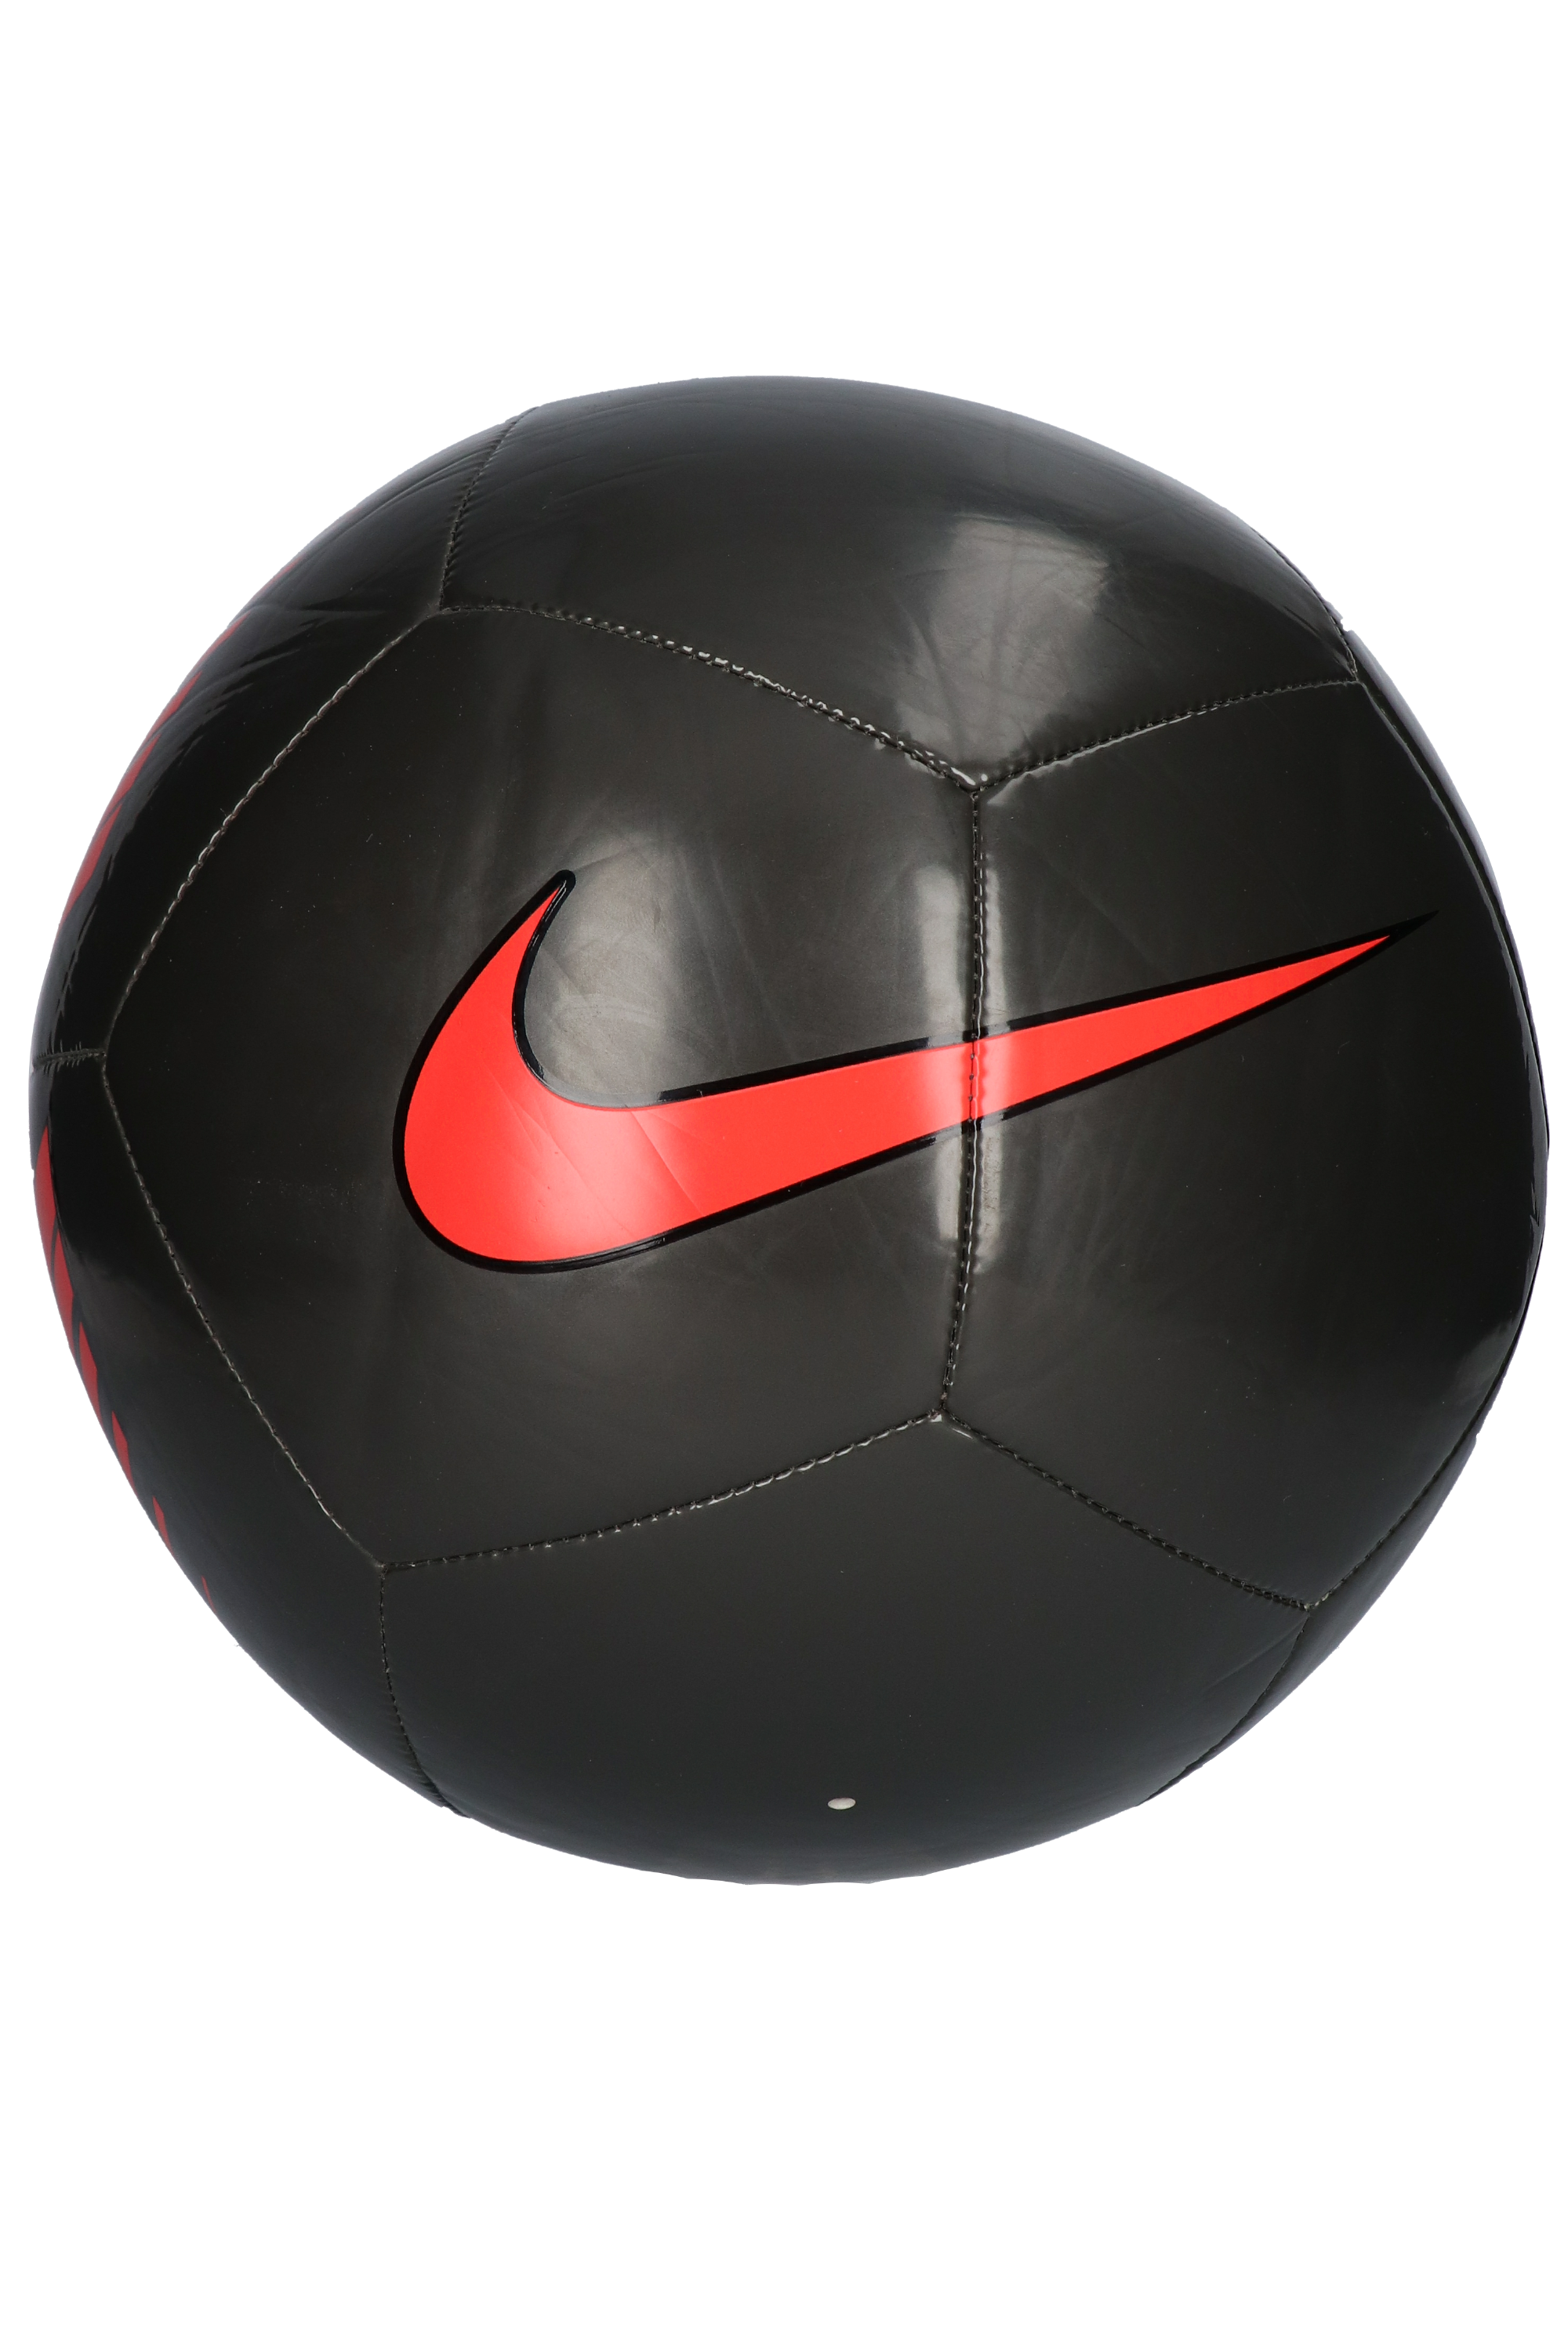 Ball Nike Pitch Training size 5 | R-GOL.com - Football boots \u0026 equipment